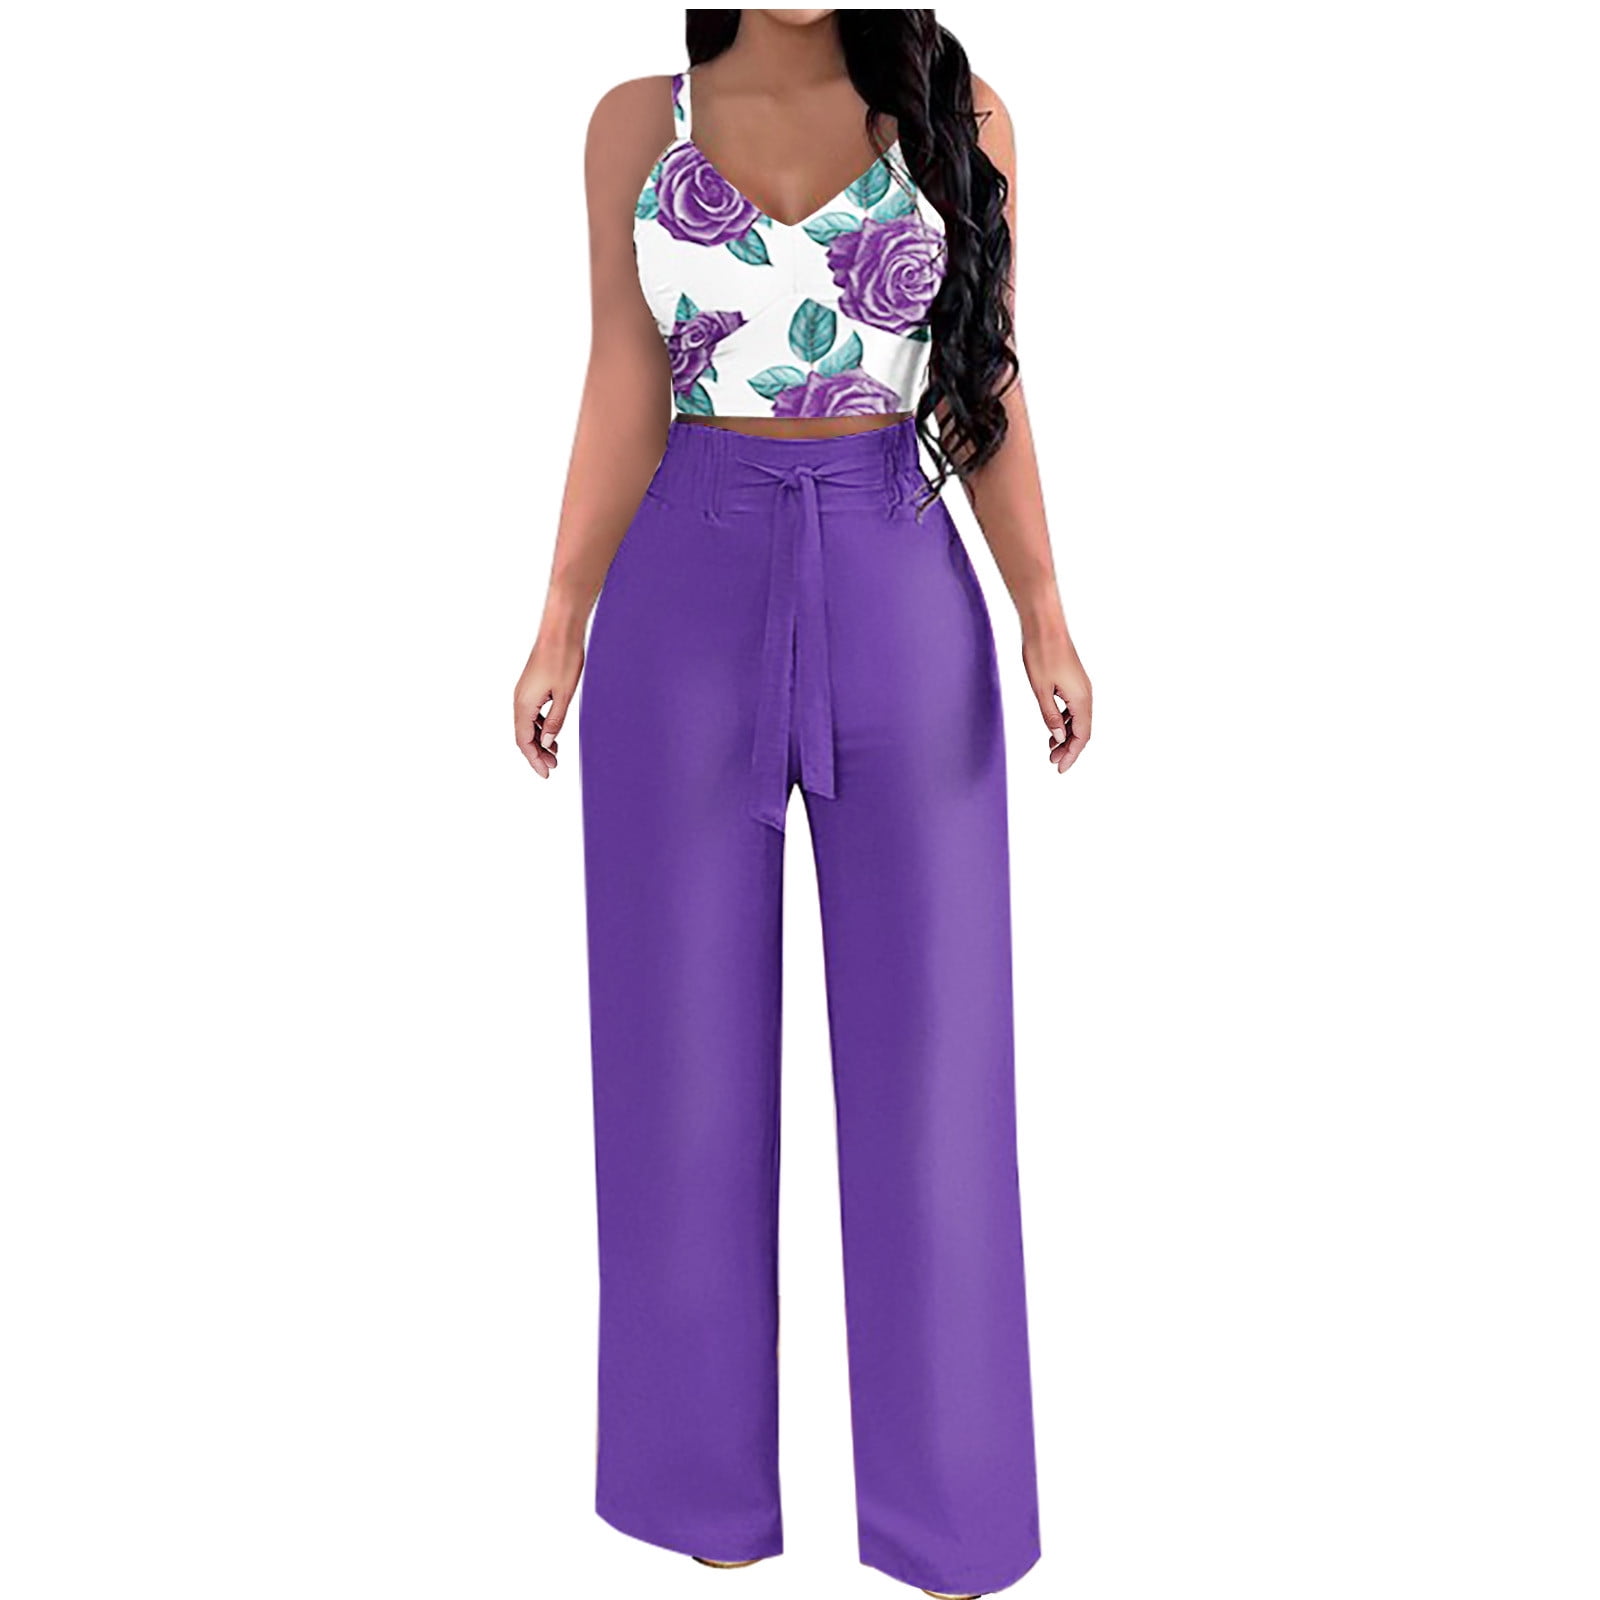 Women's Fashionable Casual Sleeveless Front Short Back Long Sleeveless Top  And Pants Set(Purple,L) 